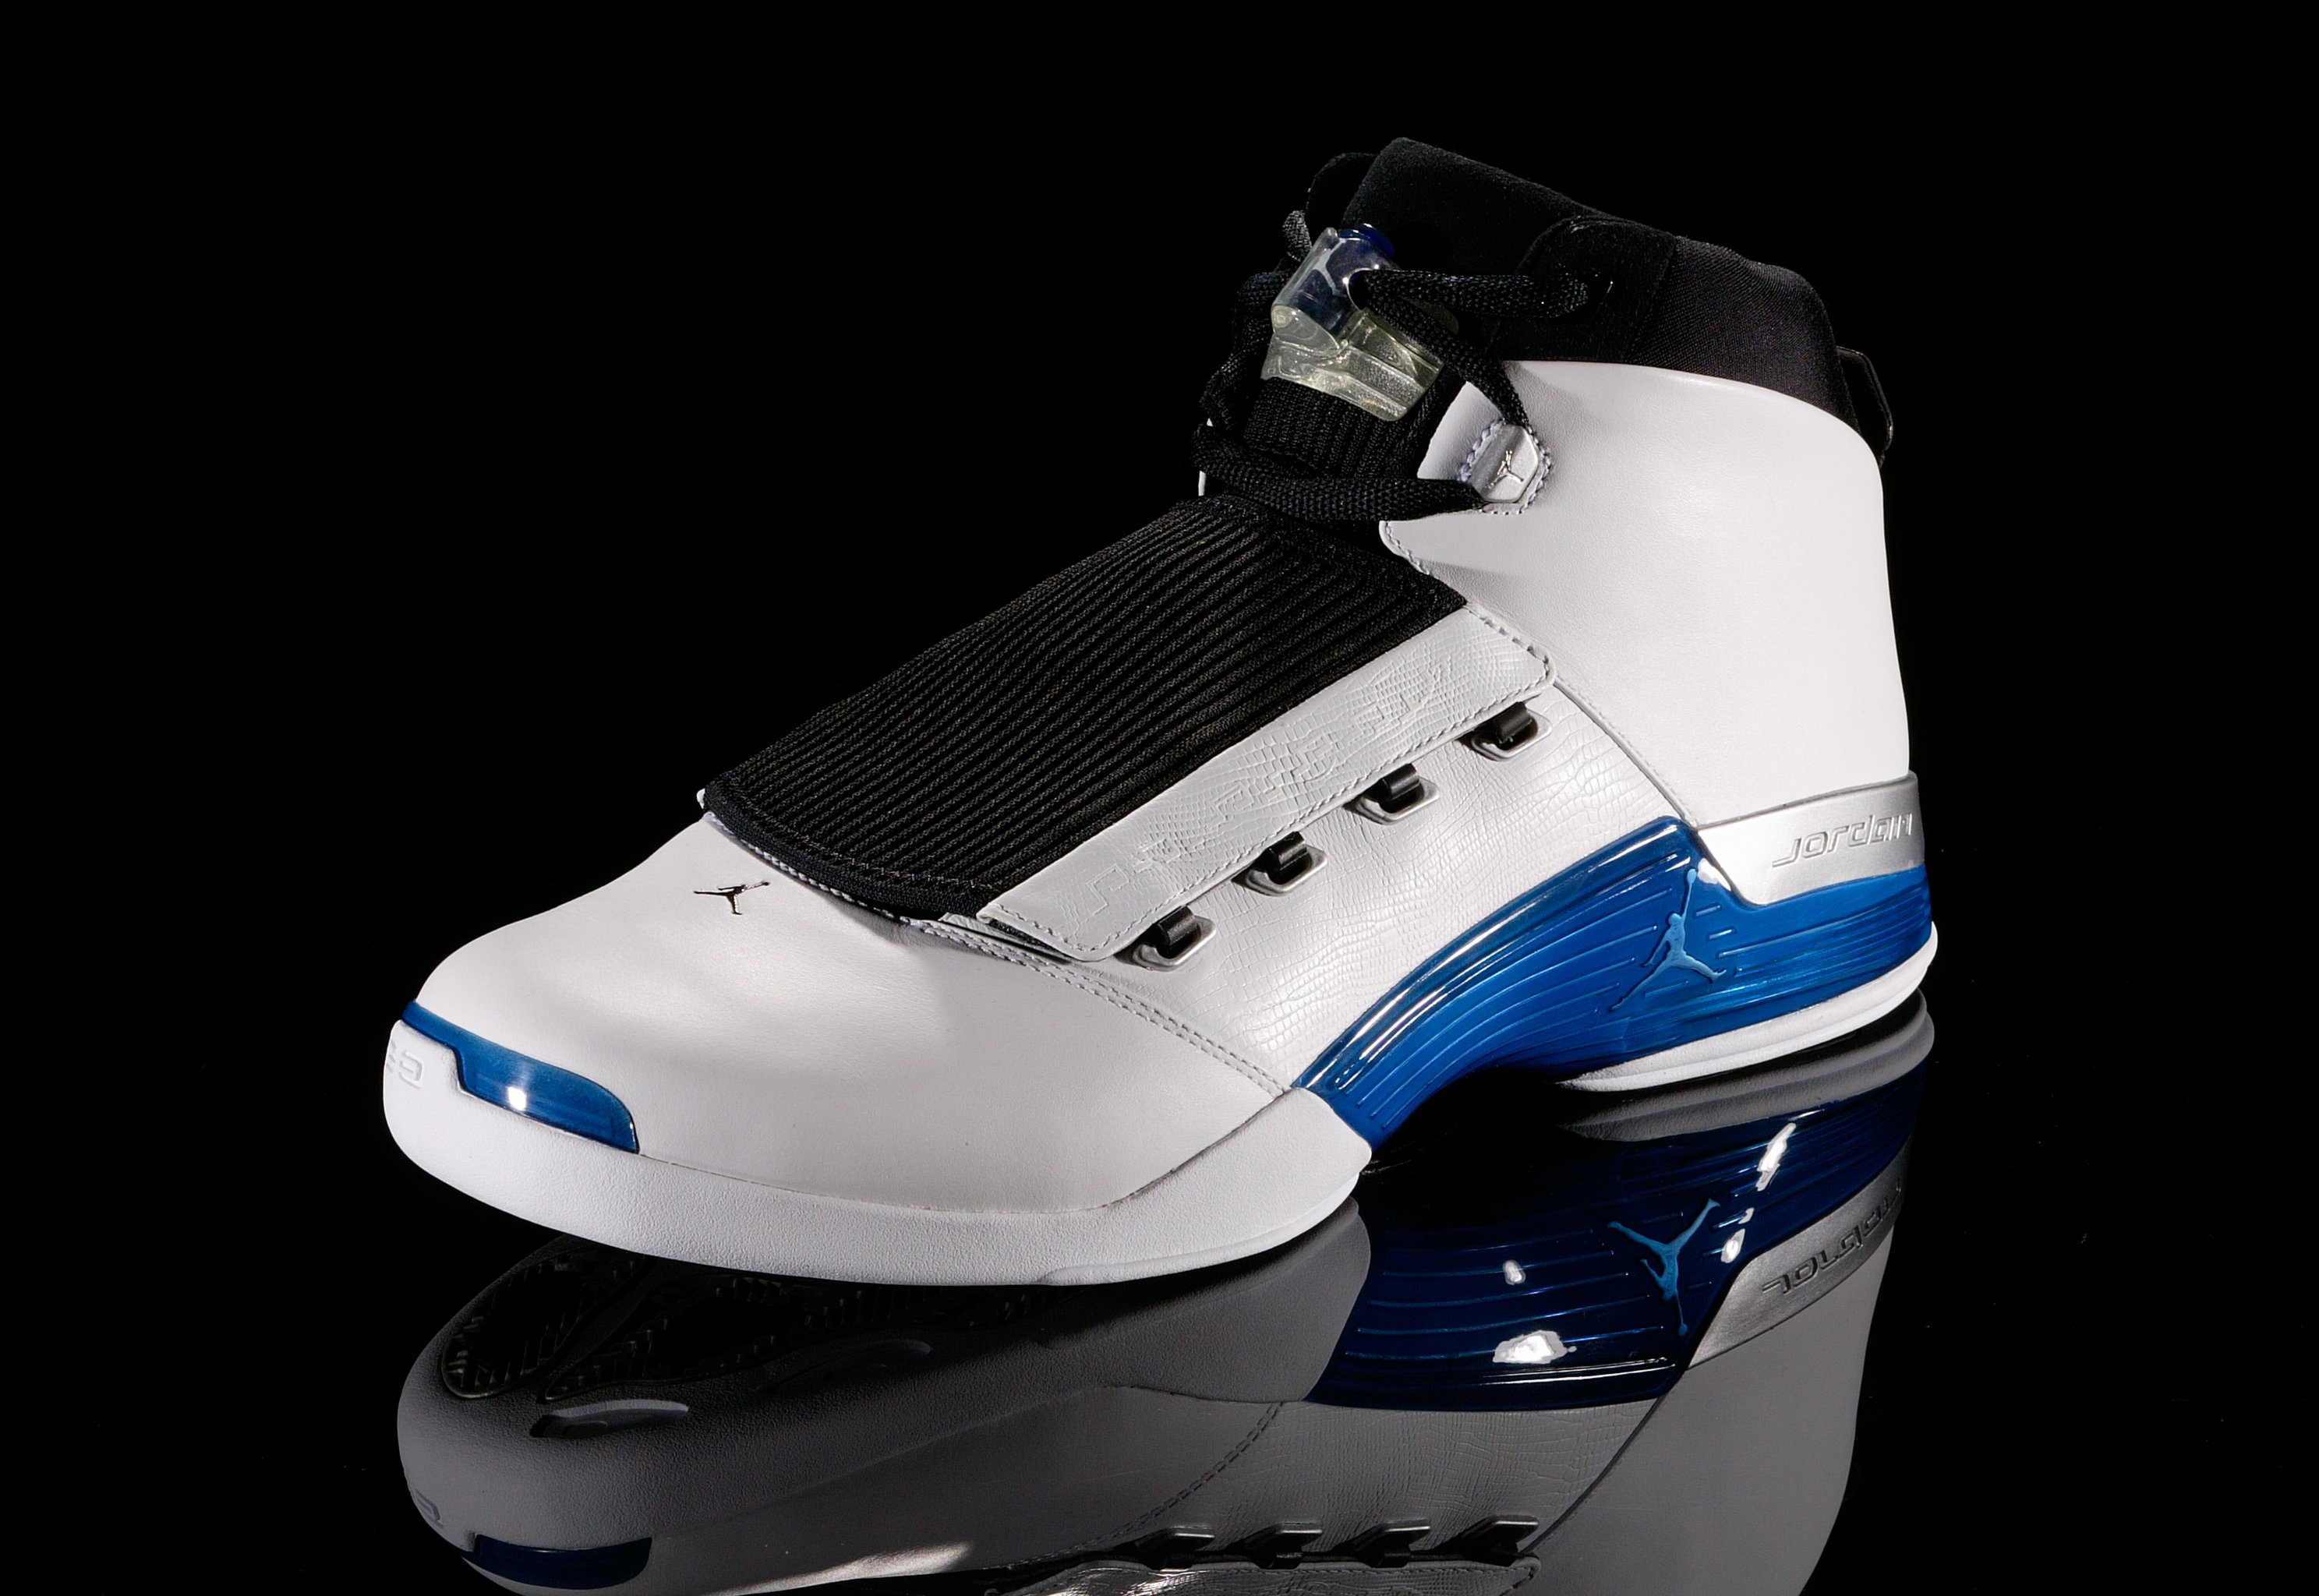 LeBron James wears Ken Griffey Jr.-inspired shoes